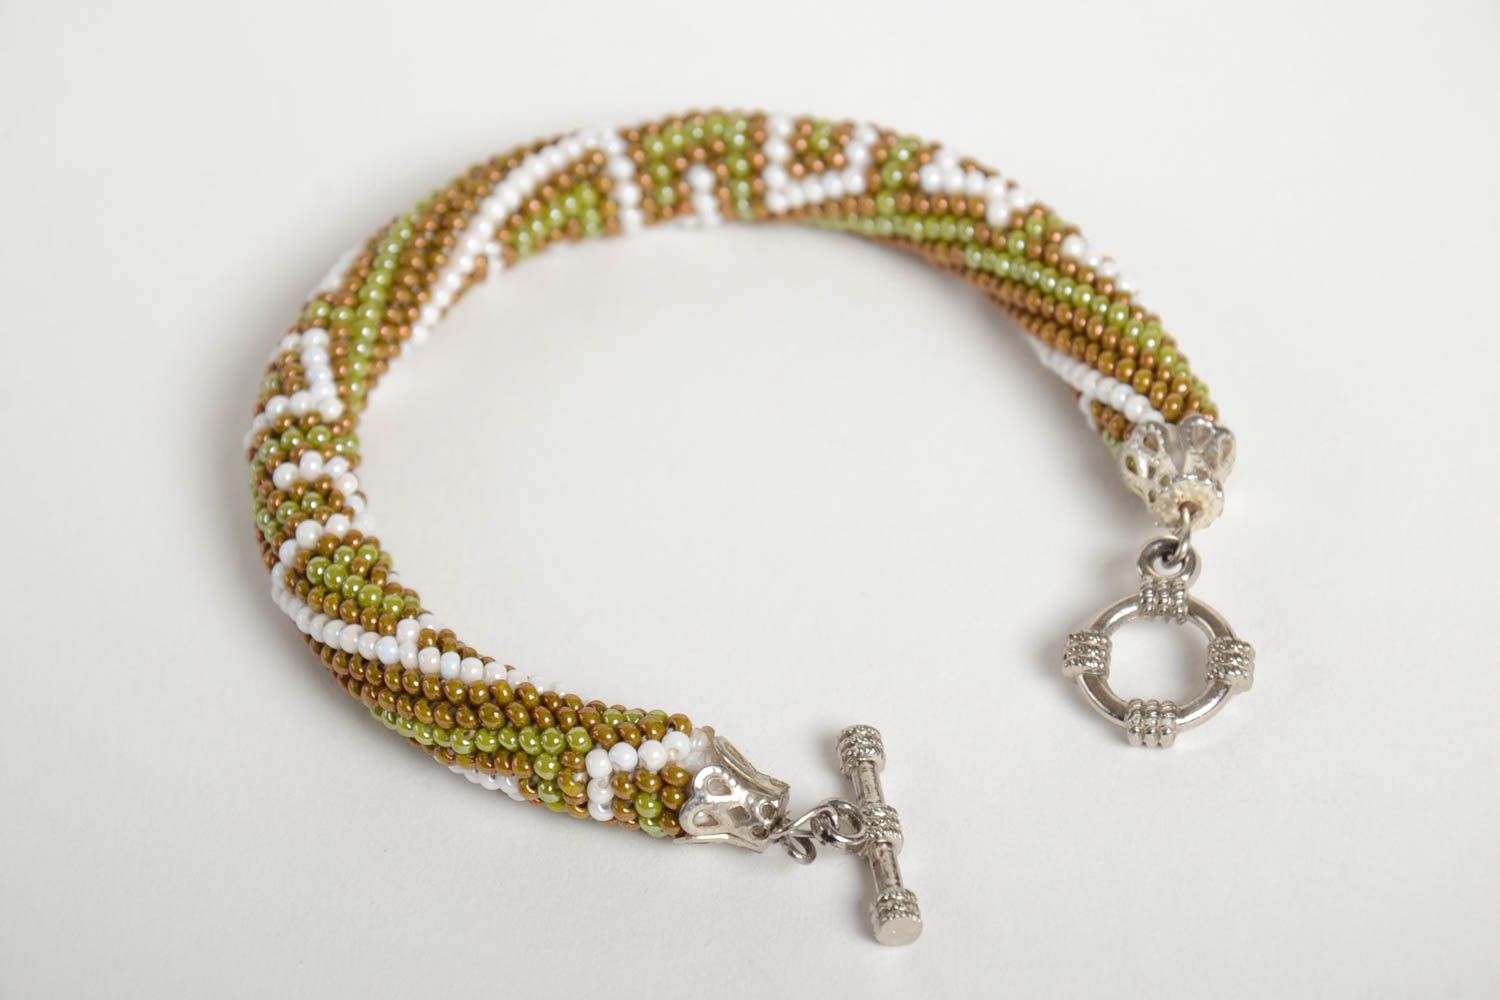 Womens handmade beaded bracelet costume jewelry bead weaving ideas gifts for her photo 3